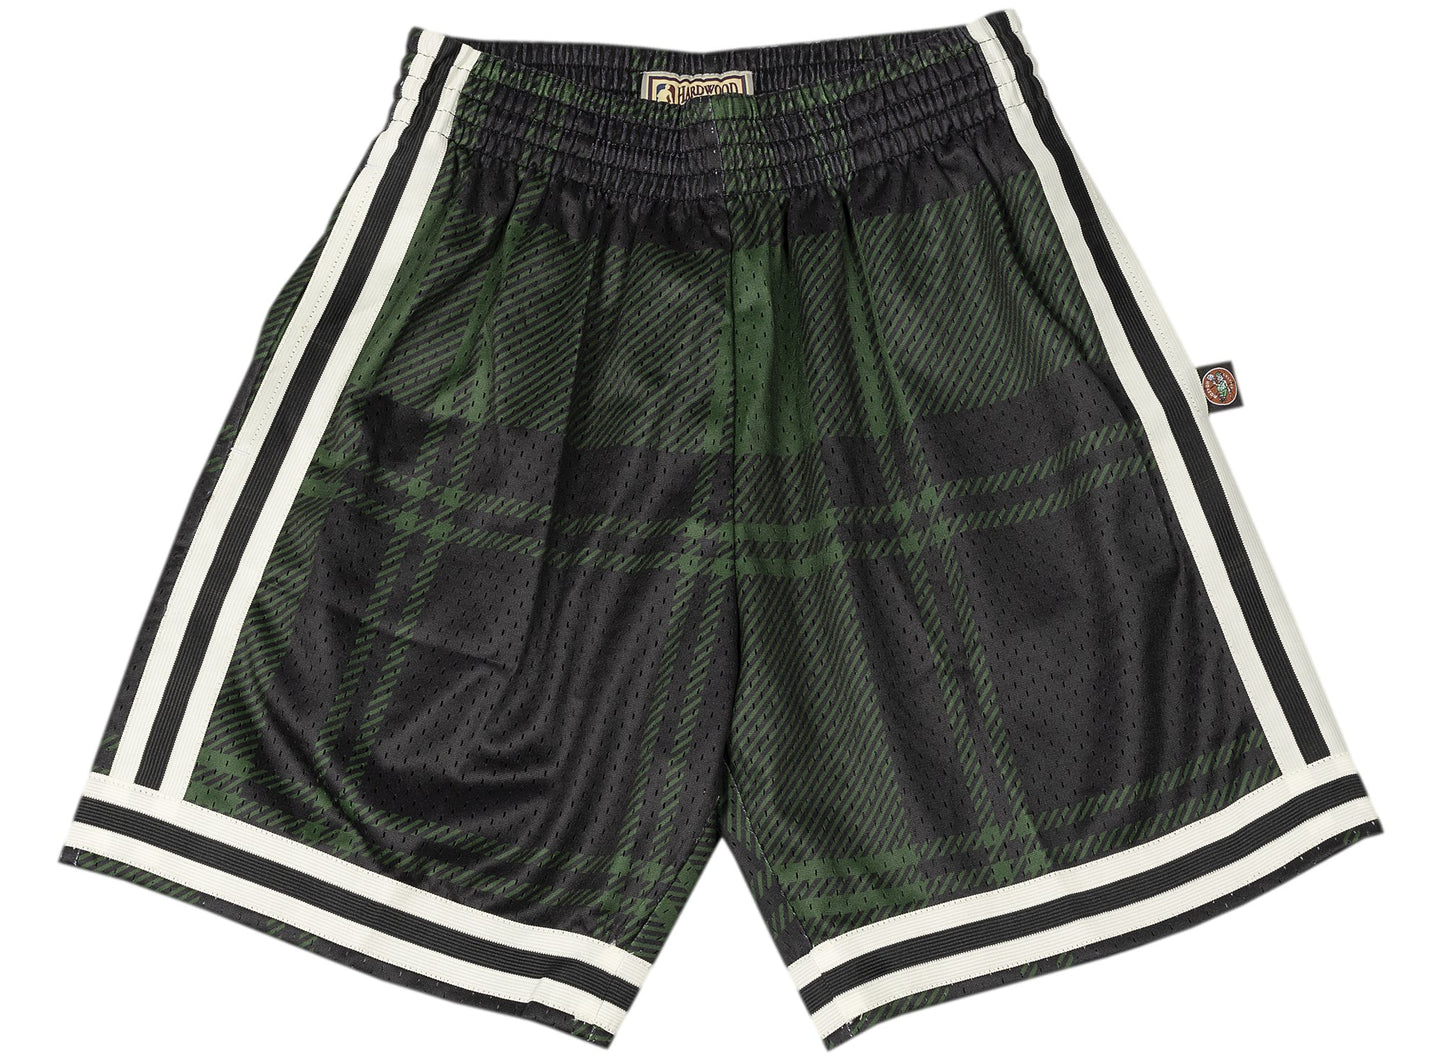 Mitchell & Ness Uninterrupted Boston Celtics Shorts XL